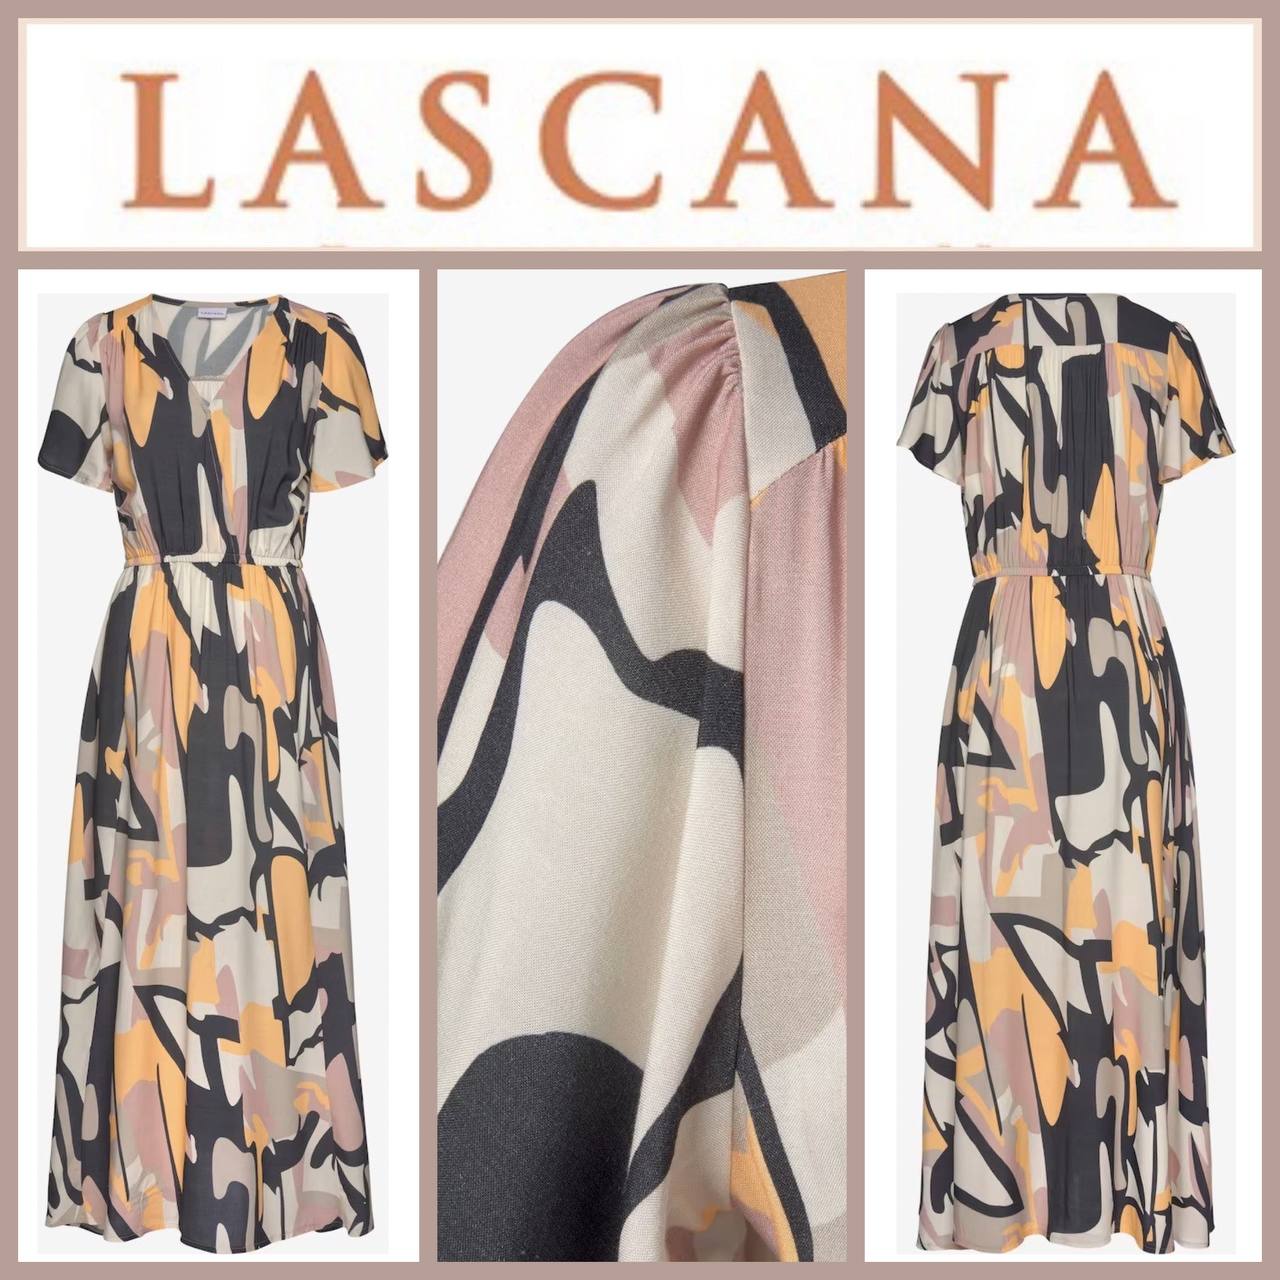 Long dress from Lascana